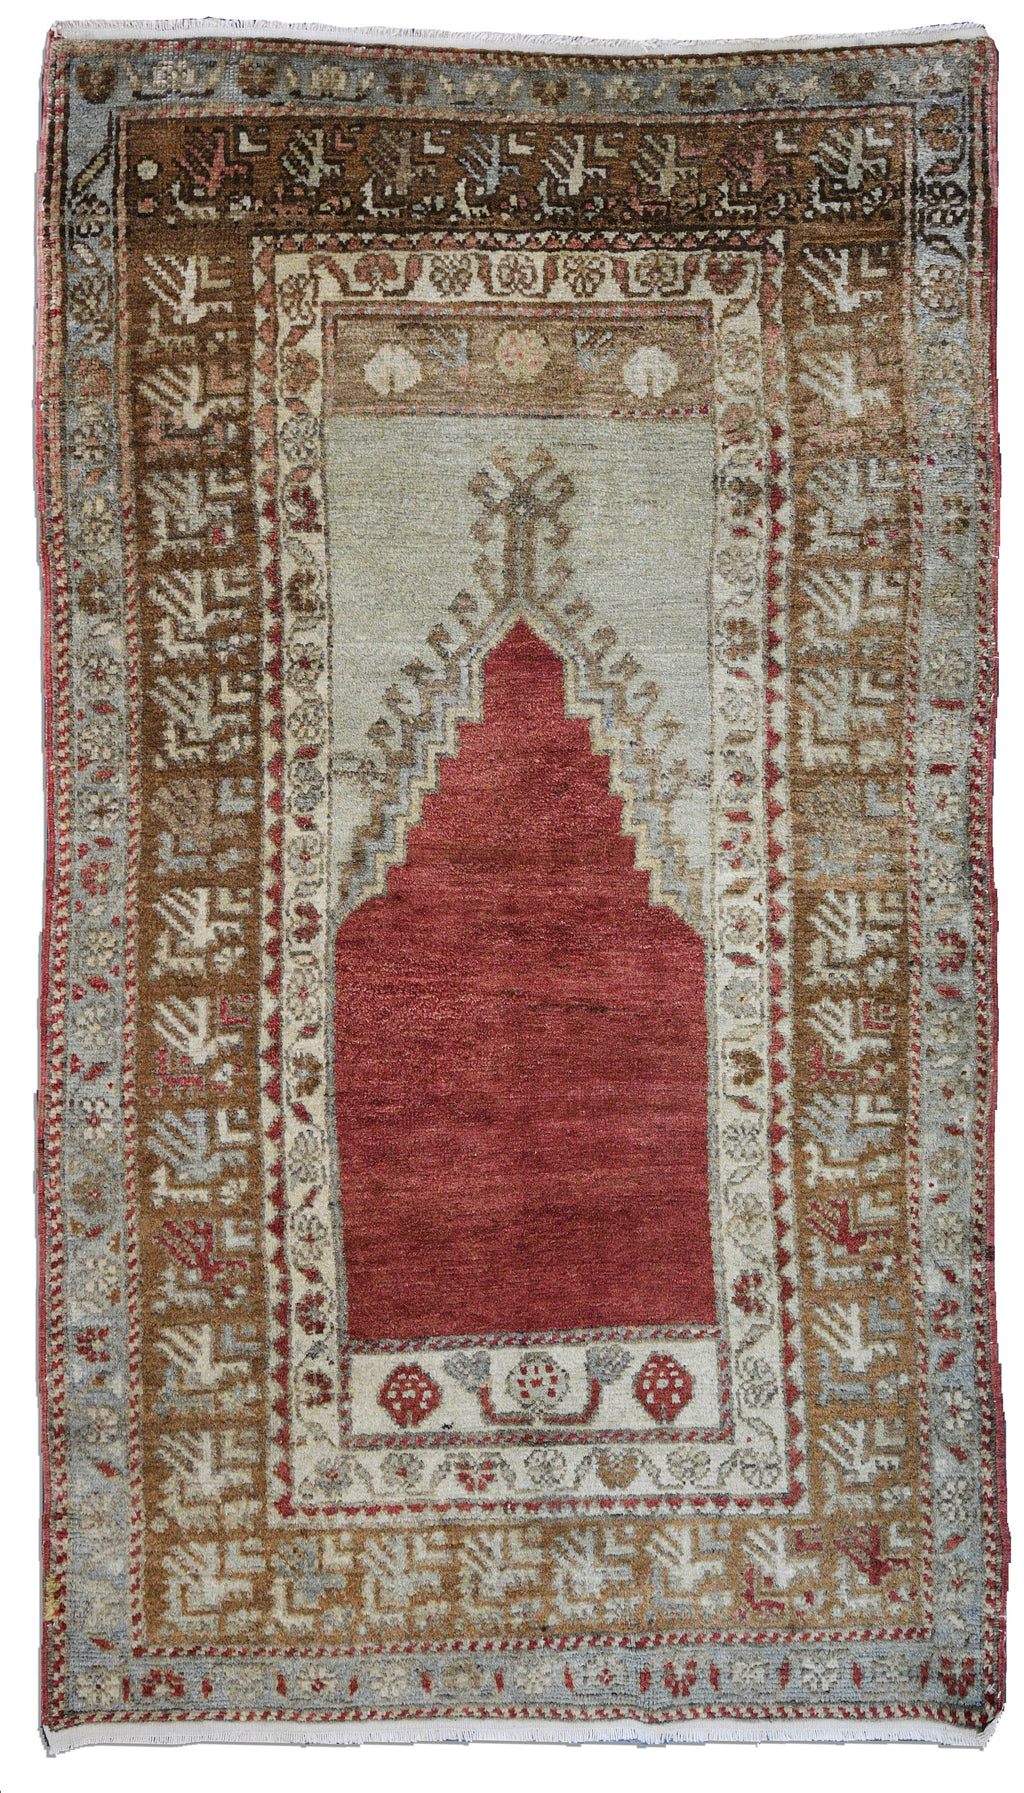 Turkish Oushak 3' x 5'4" prayer rug